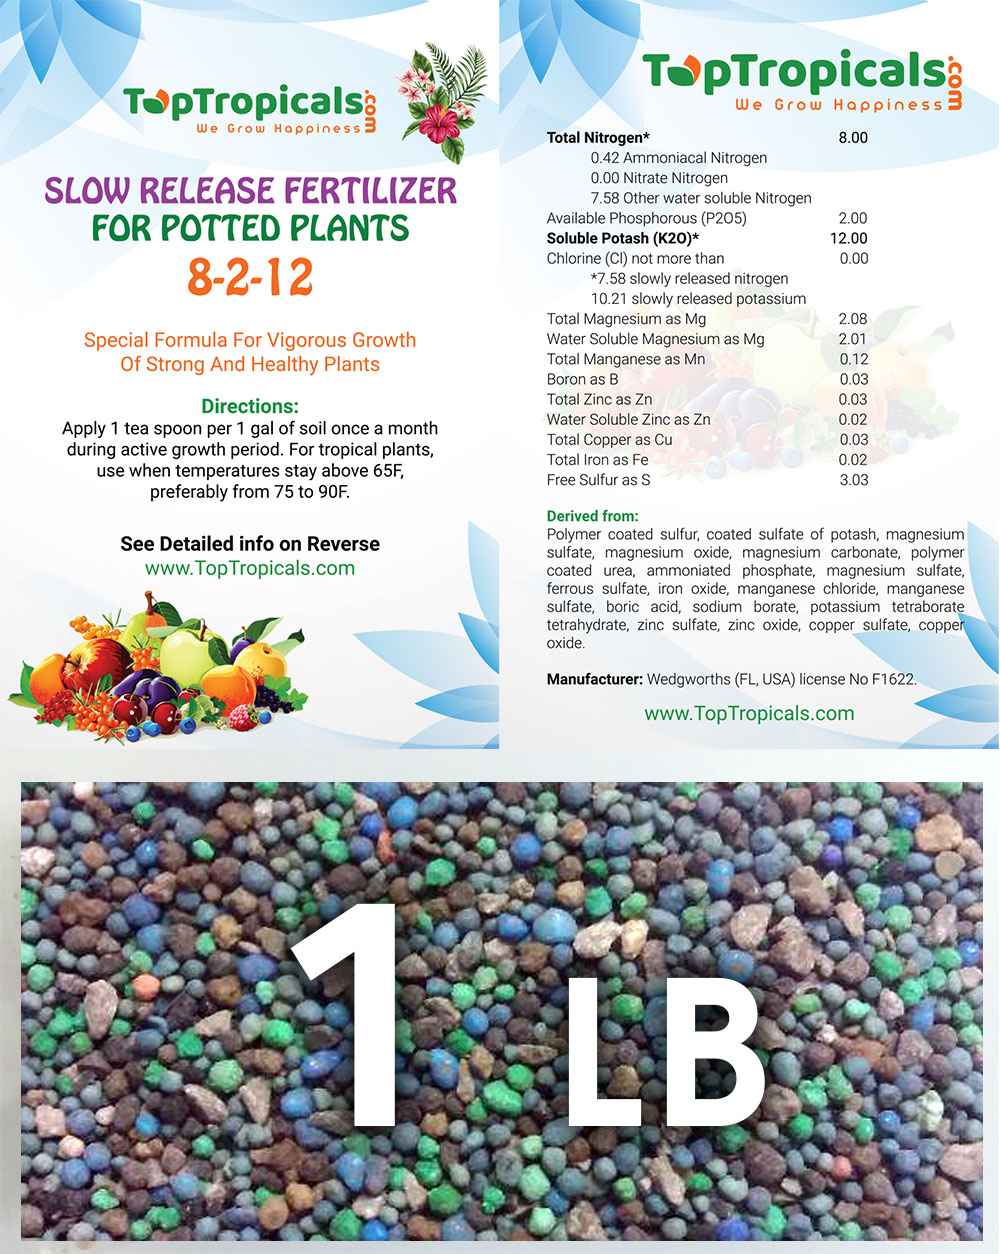 TopTropicals Smart Release Fertilizer, 1 lb